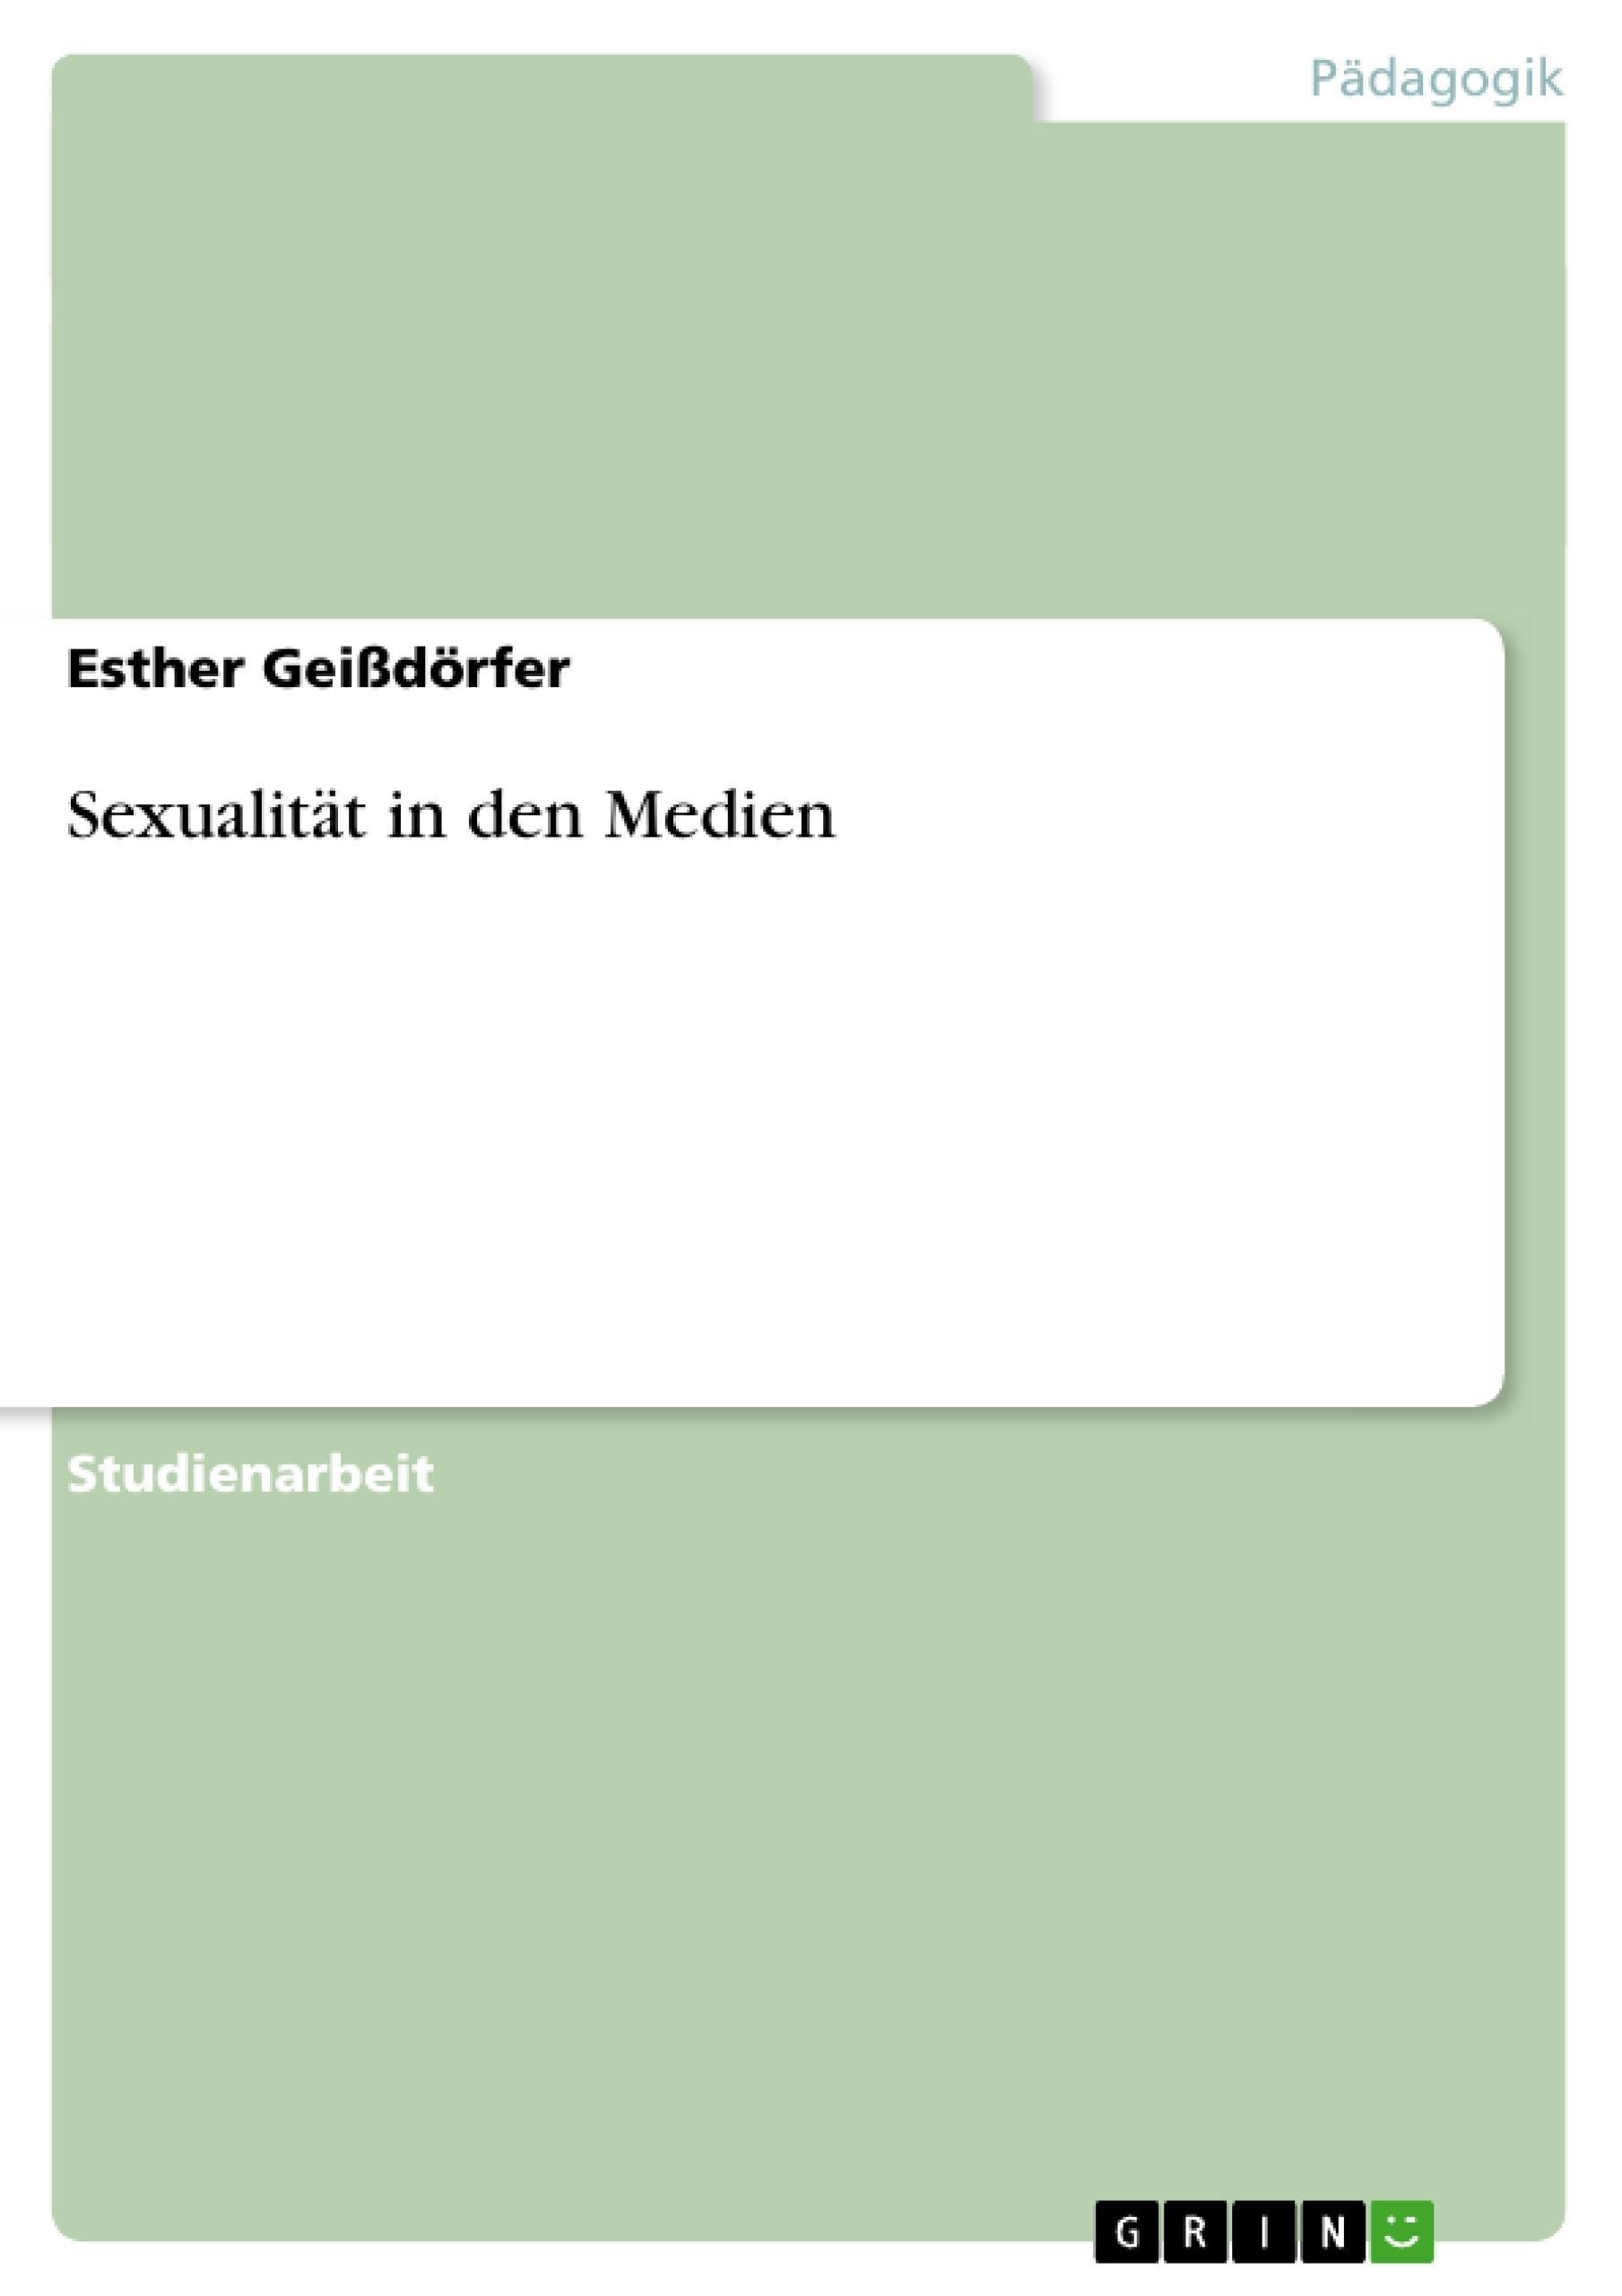 Sexualität In Den Medien - Esther Geißdörfer  Kartoniert (TB)